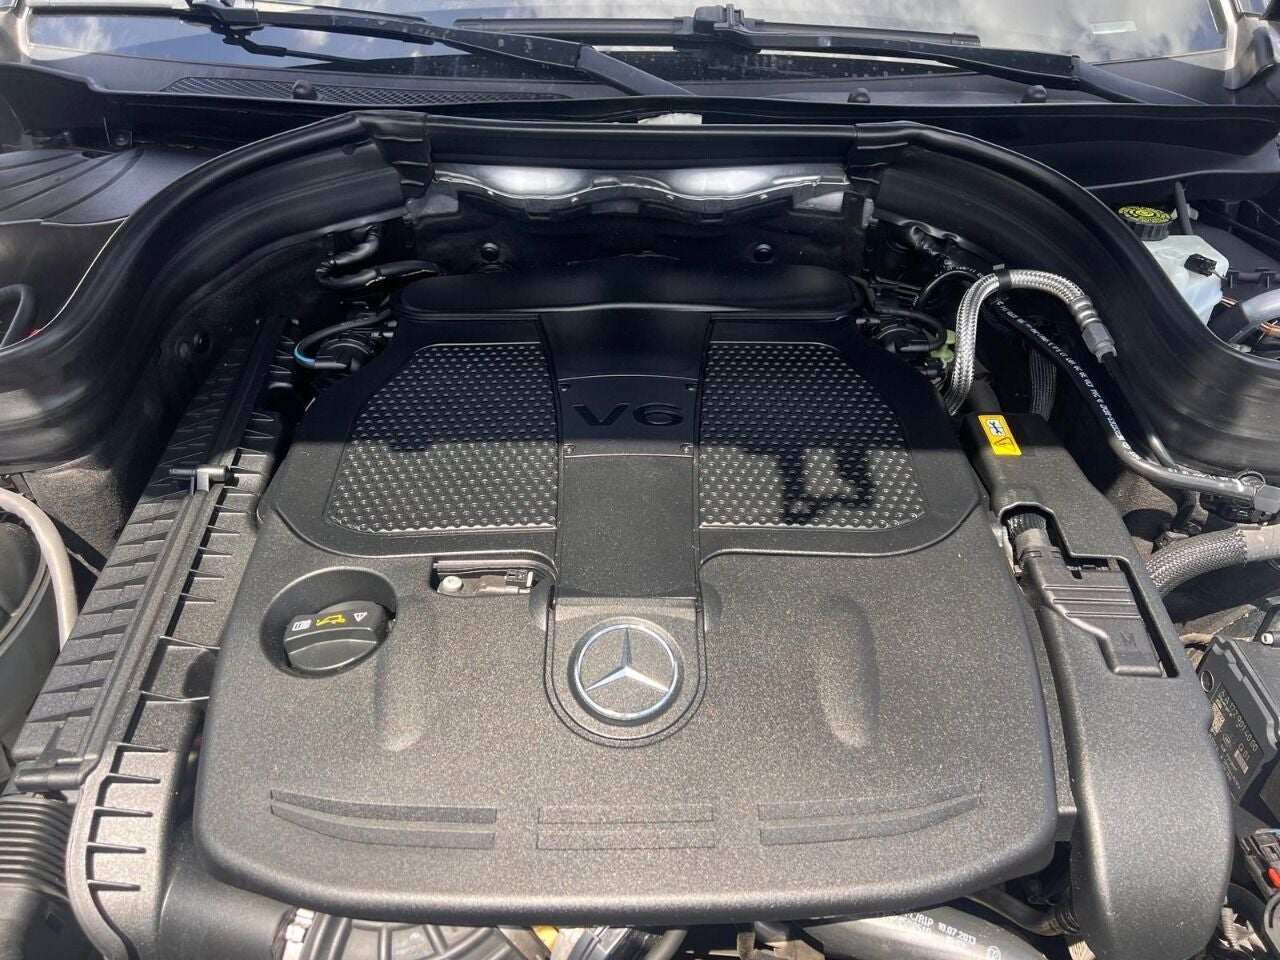 2014 Mercedes-Benz GLK GLK 350 4MATIC® AWD 4dr SUV